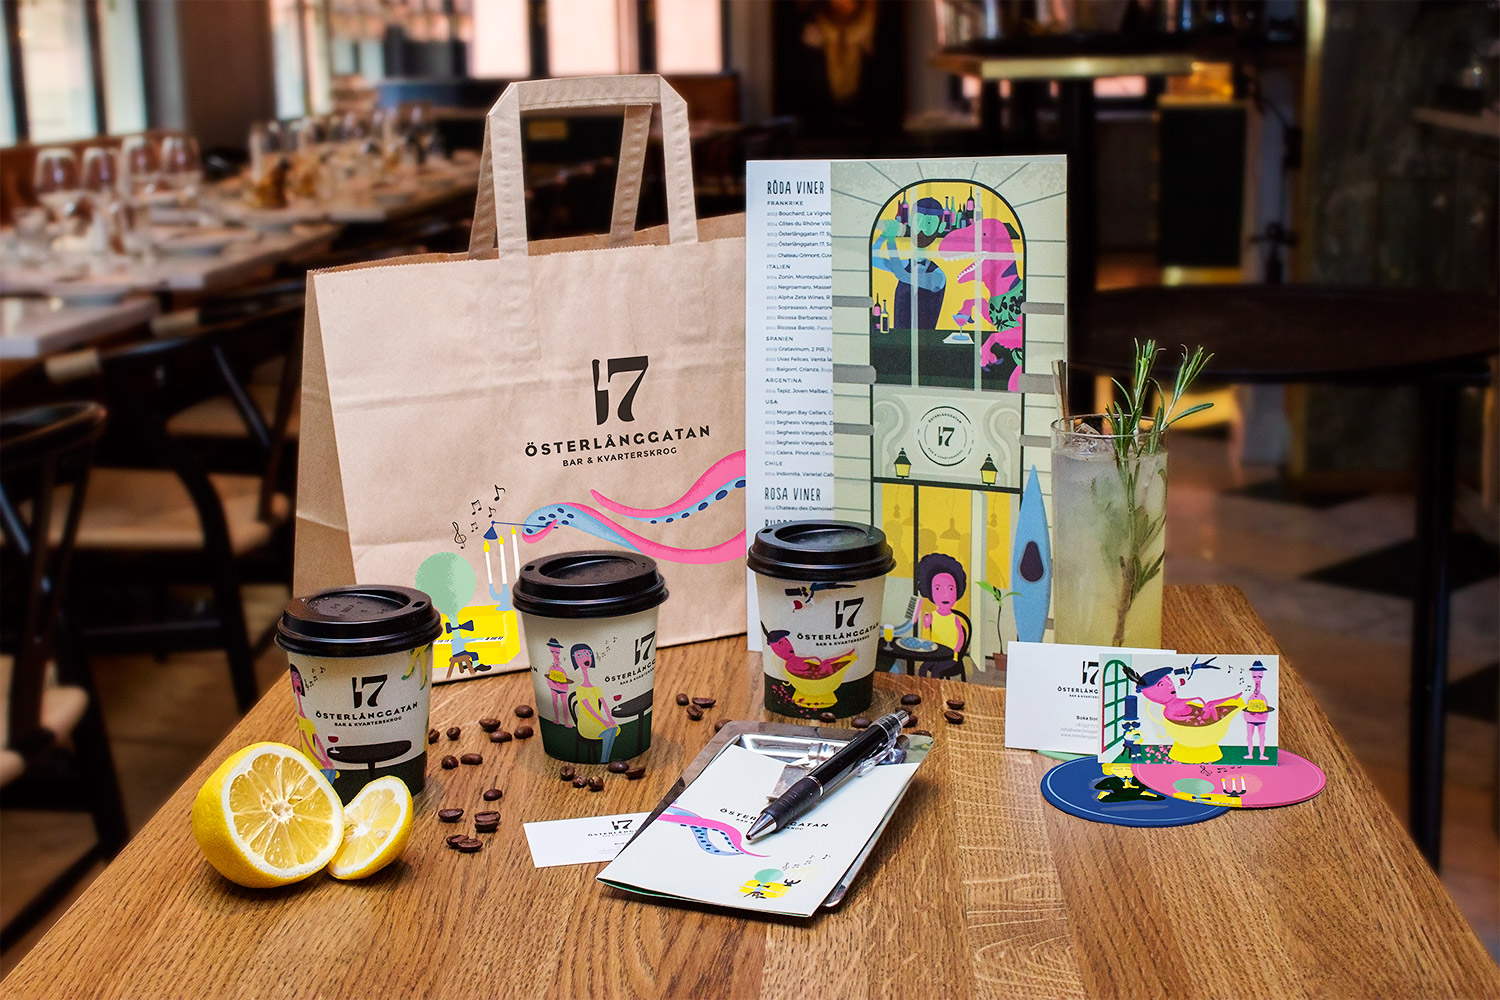 Brand identity, bags, menus and coffee cups for Stockholm restaurant Österlånggatan 17 by Lobby Design